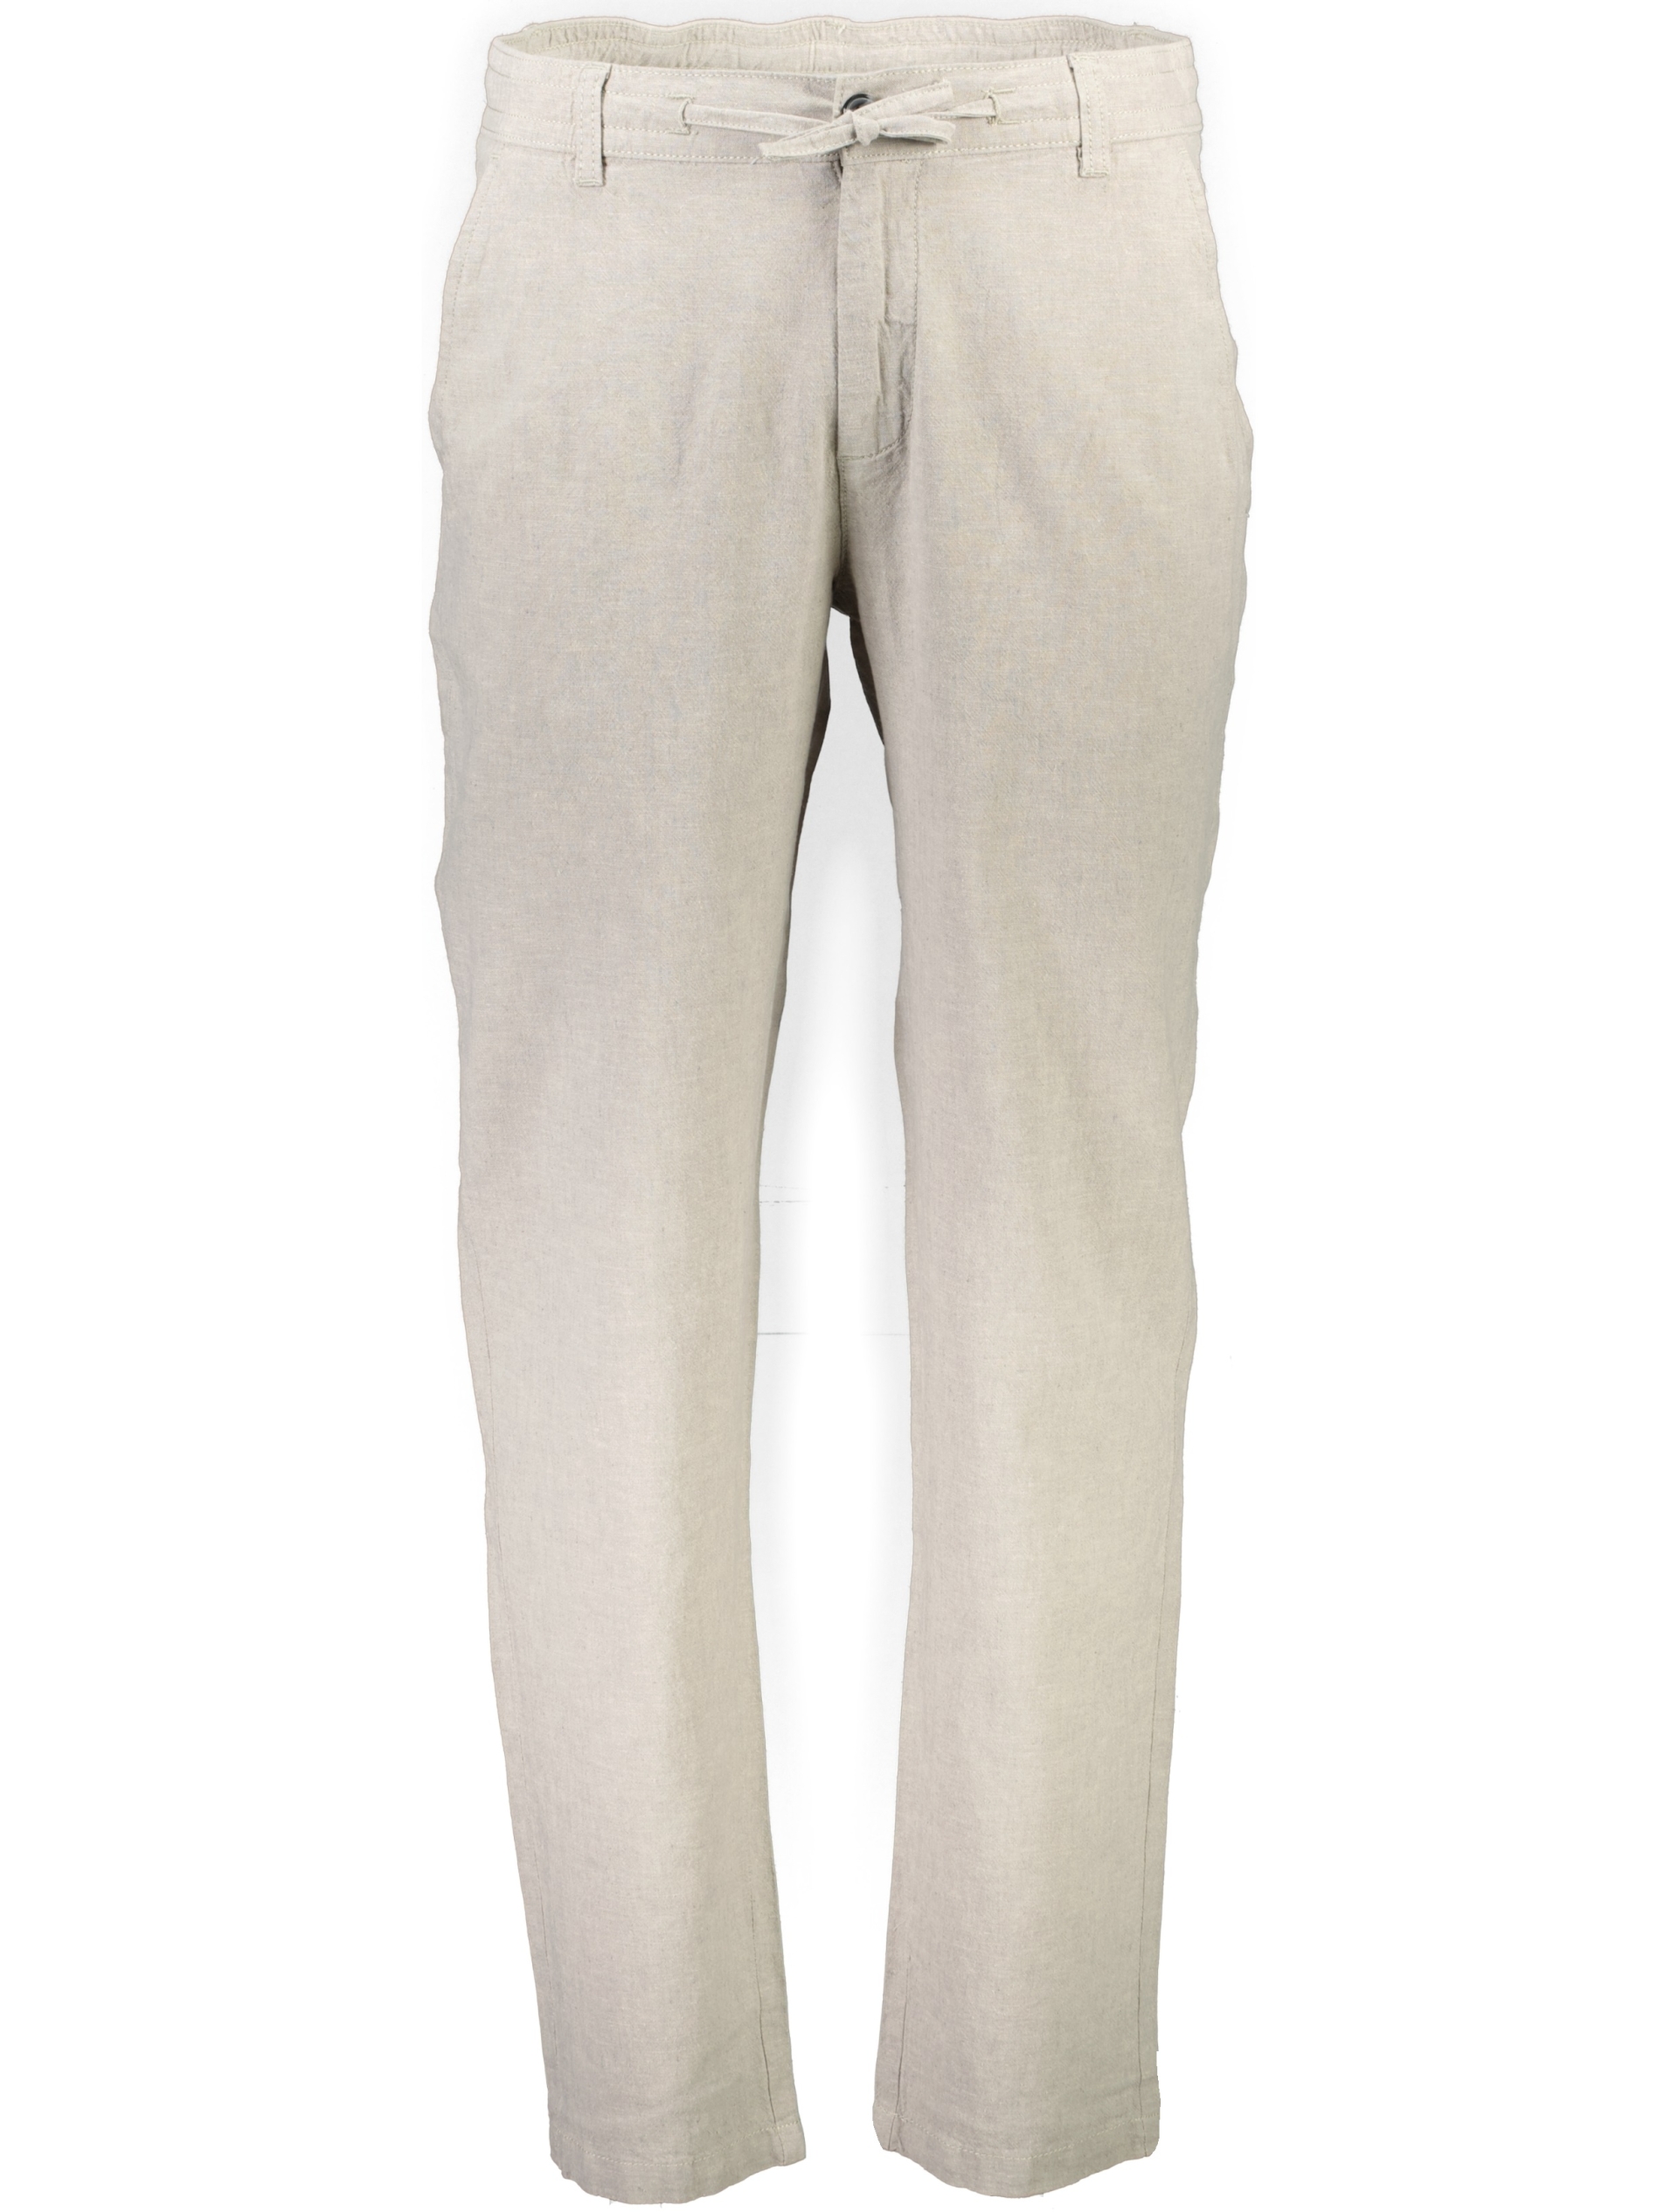 Lindbergh Linen pants grey / grey